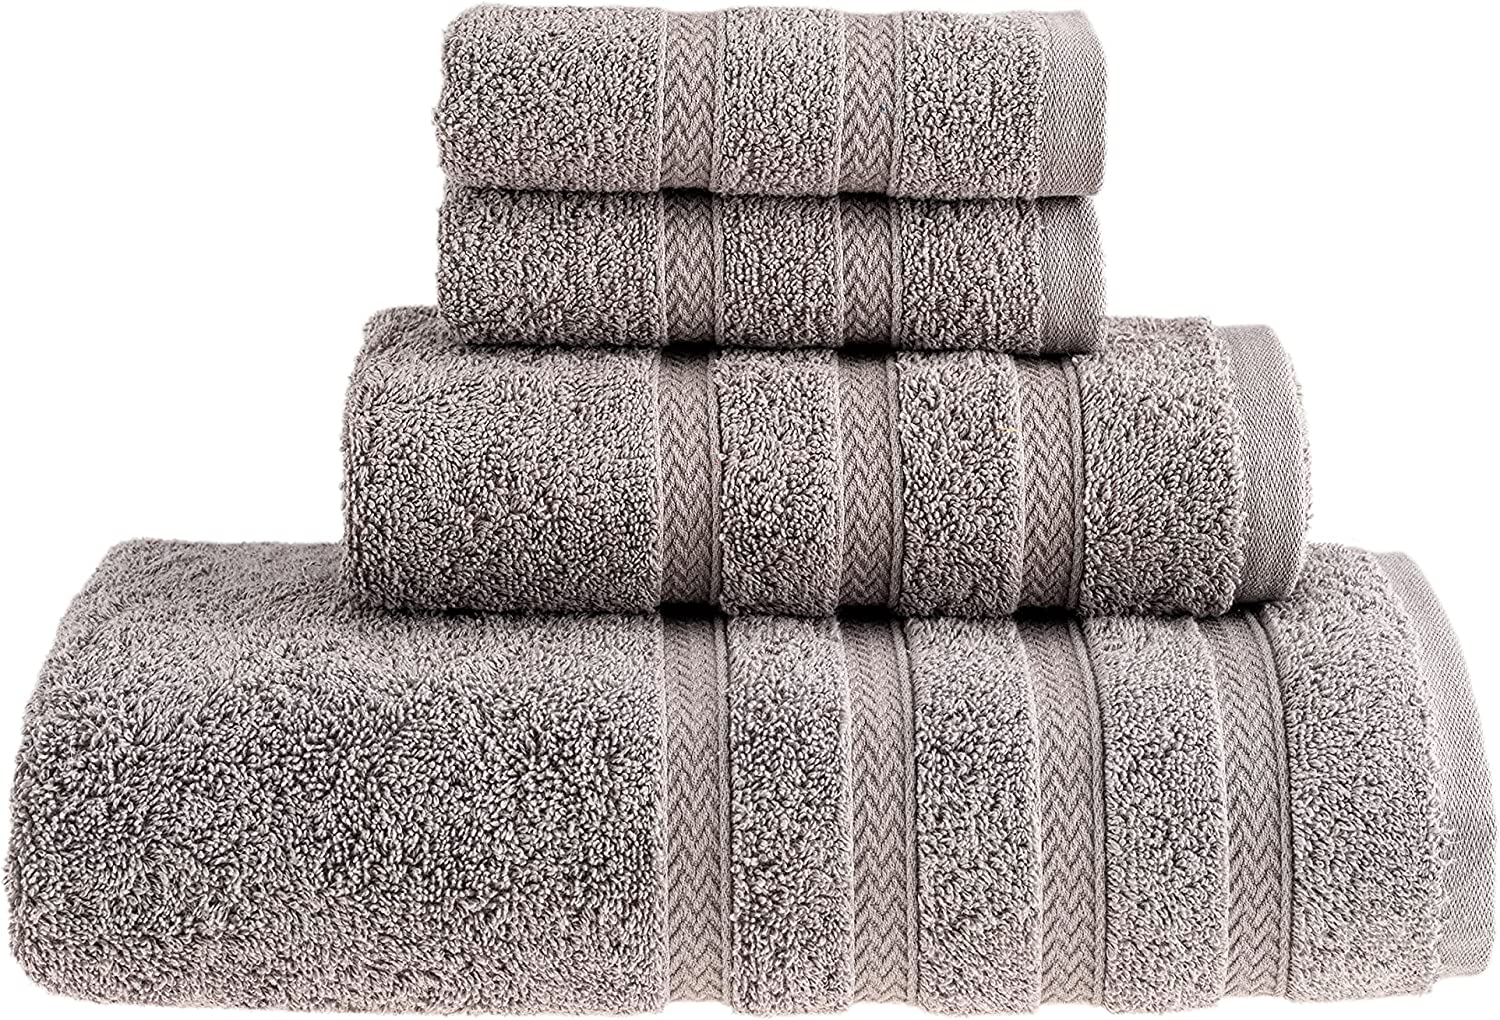 HALLEY Decorative Bath Towels Set, 6 Piece - Turkish Towel Set